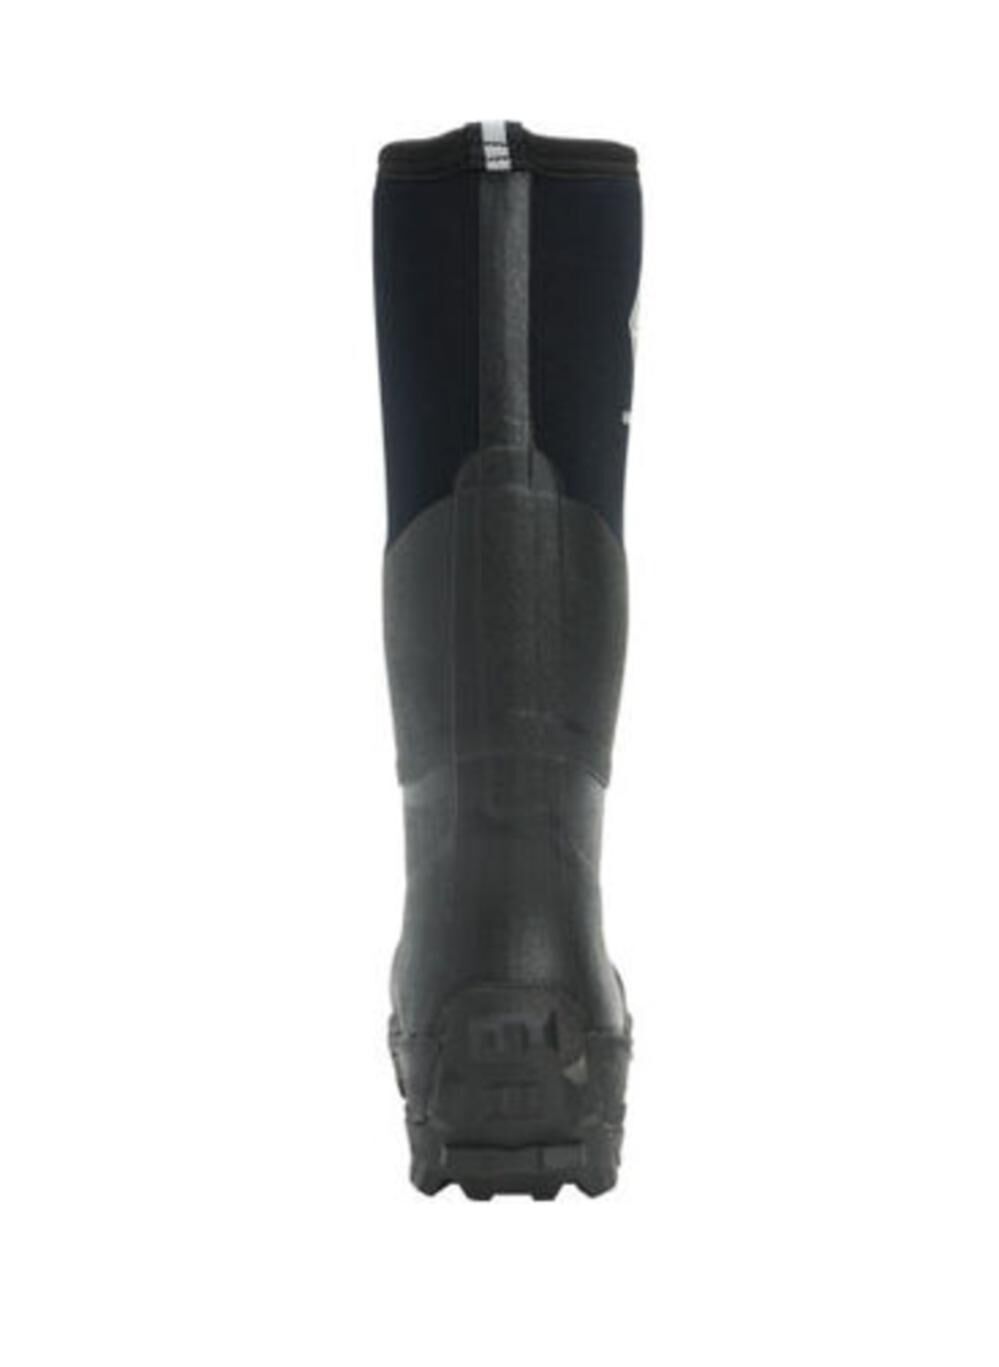 Boots Mens Muckmaster Tall Black Boots Size 15 MMH-500A-BL-150